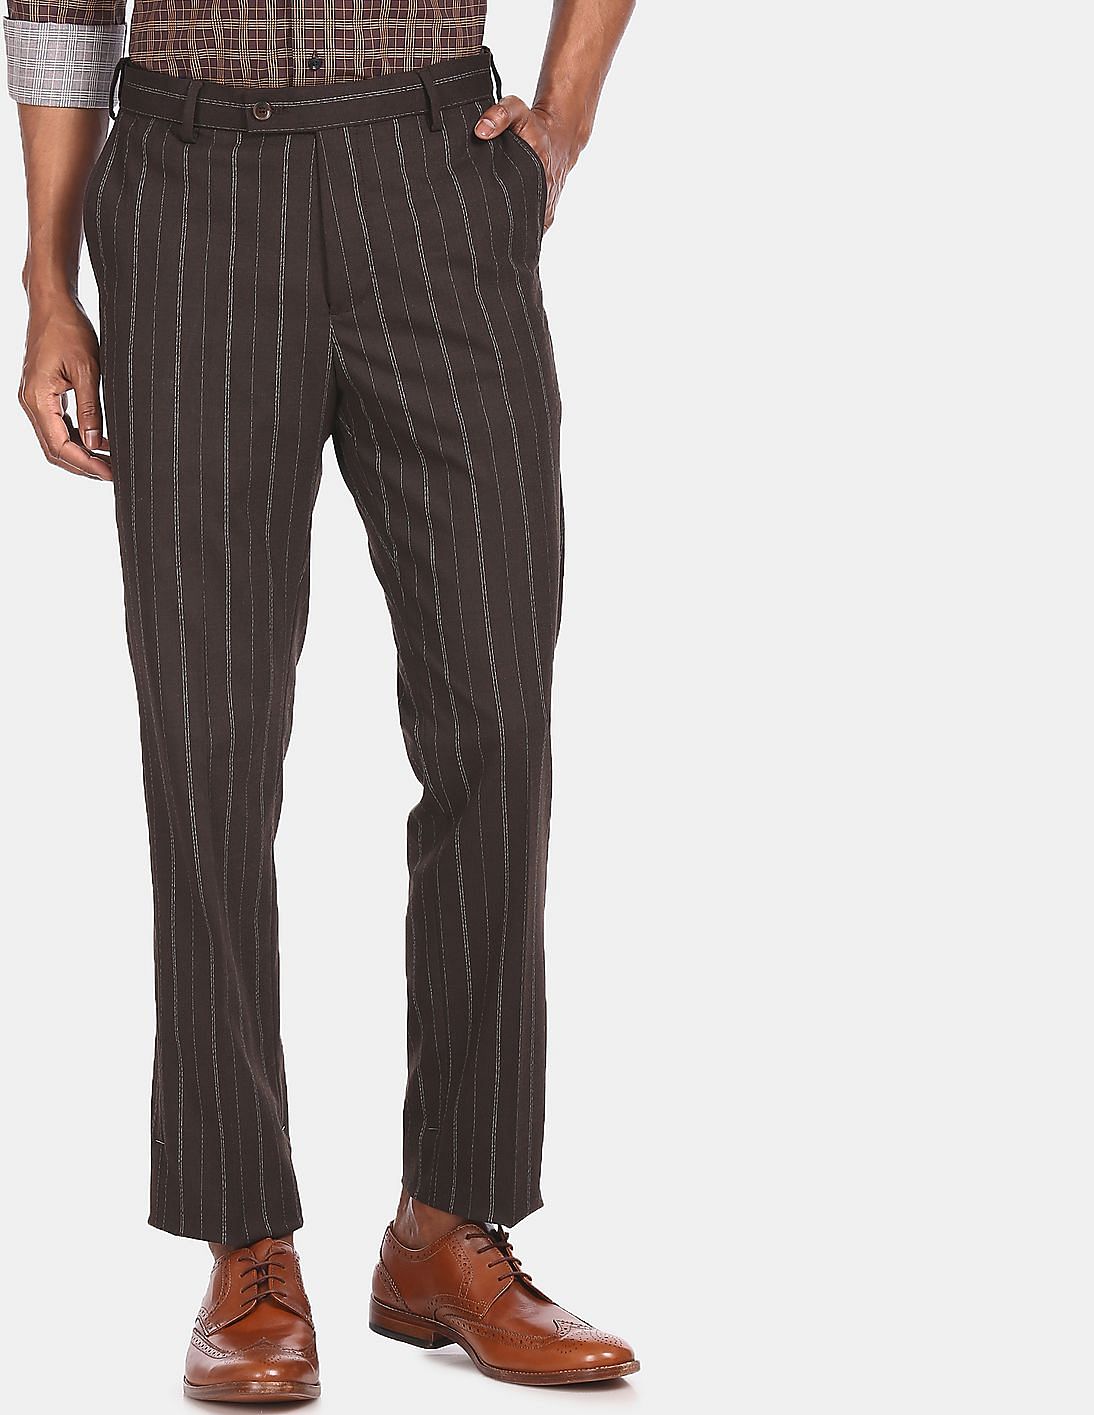 Buy Sand Stripe Linen Pants | Casual Khaki Stripes Pants for Men Online |  Andamen